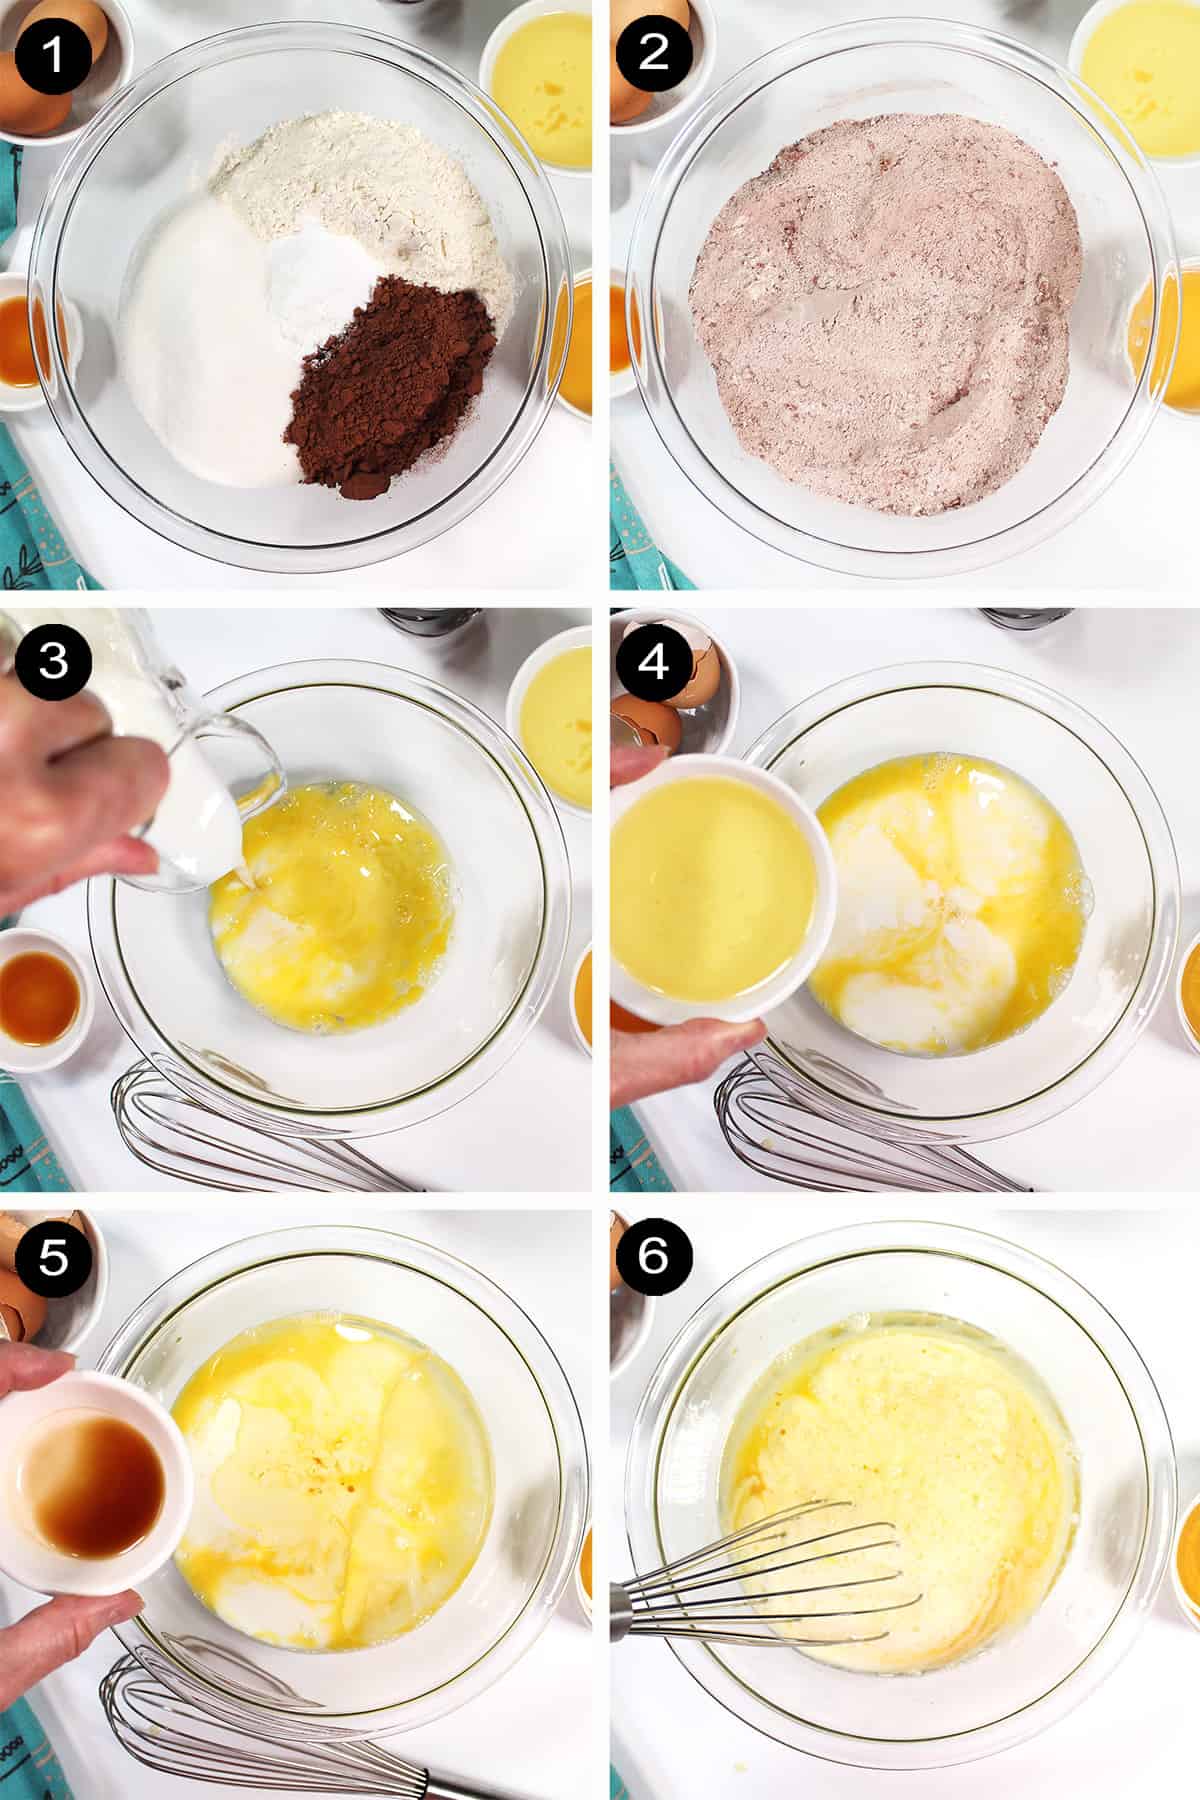 Steps 1-6 to make chocolate cake batter.